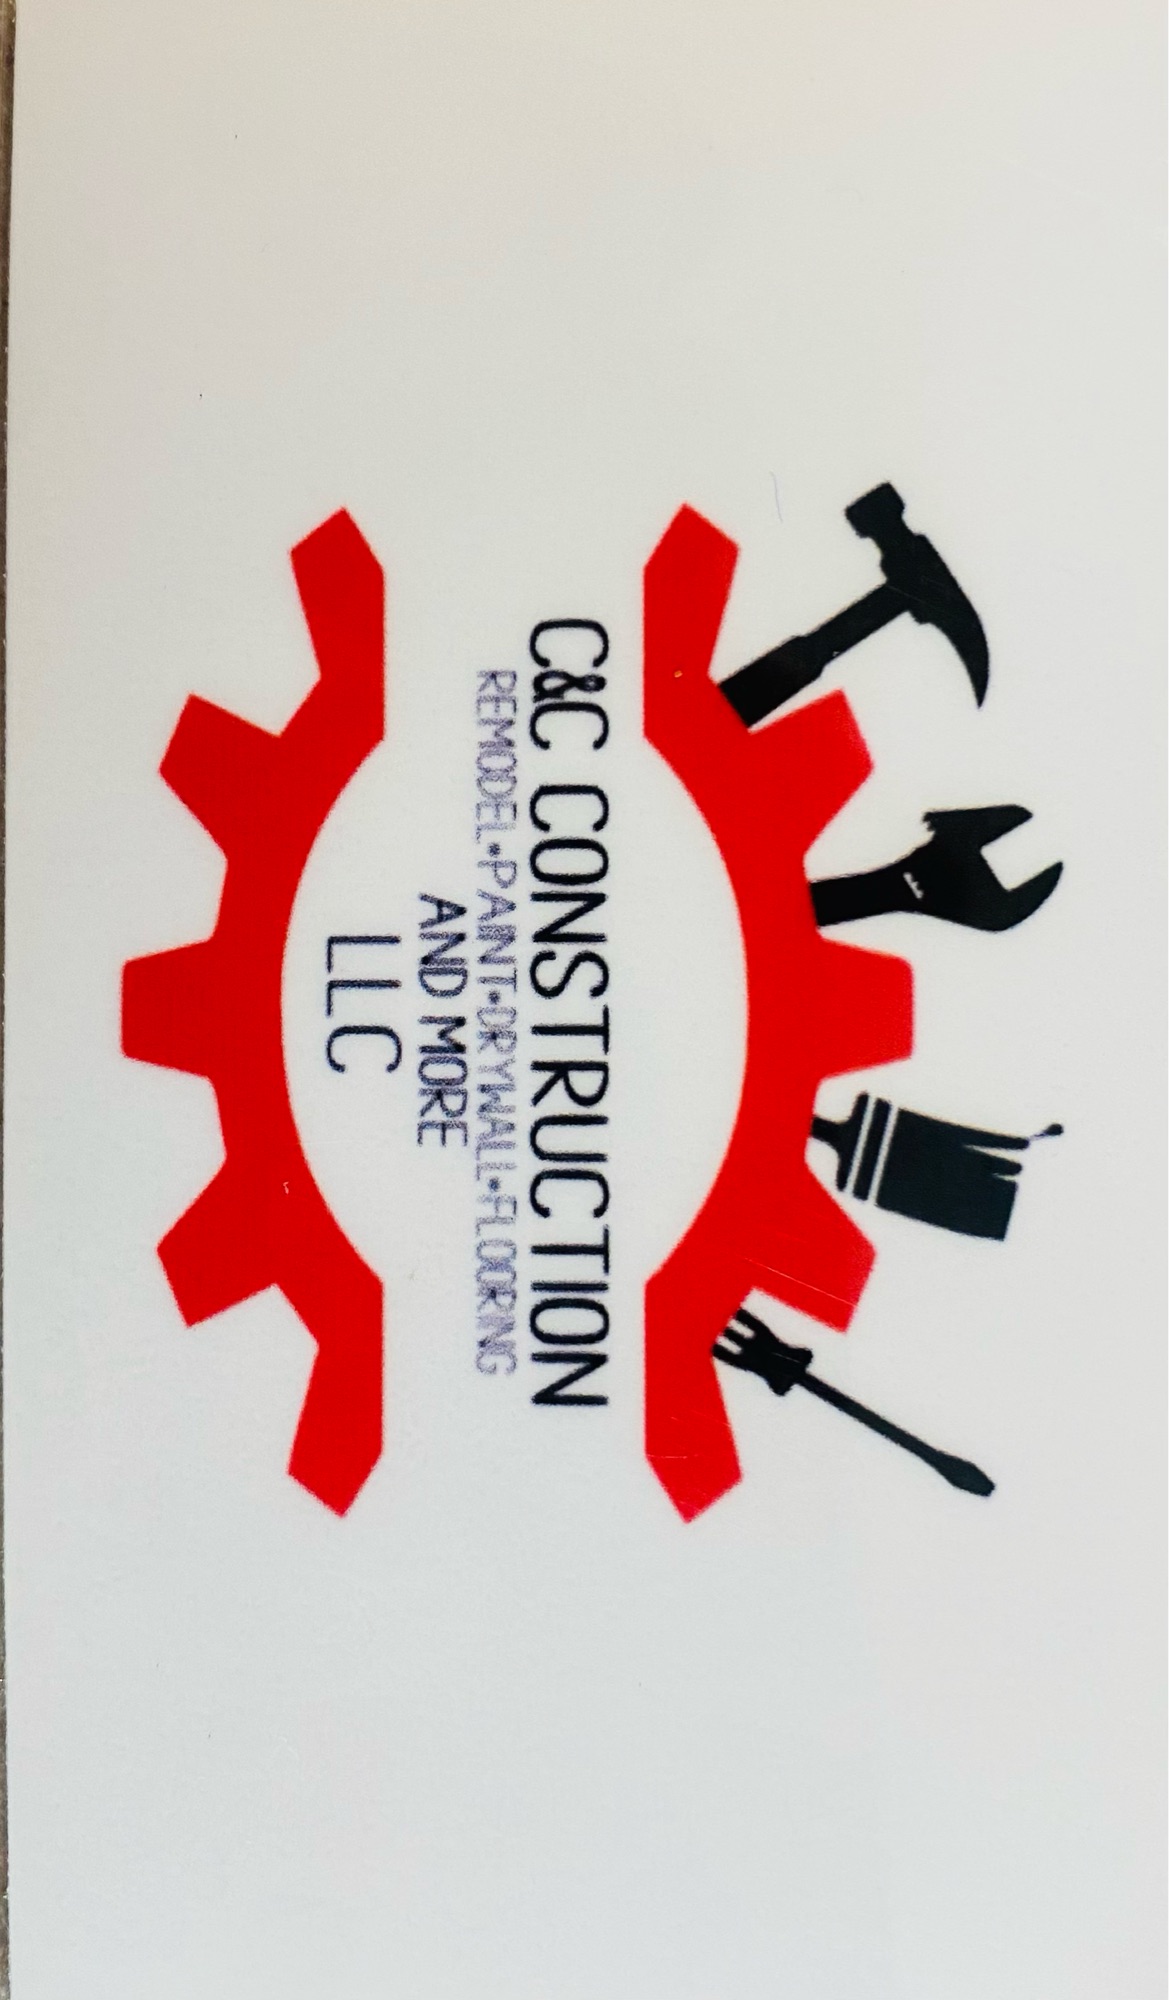 CNC Construction Logo